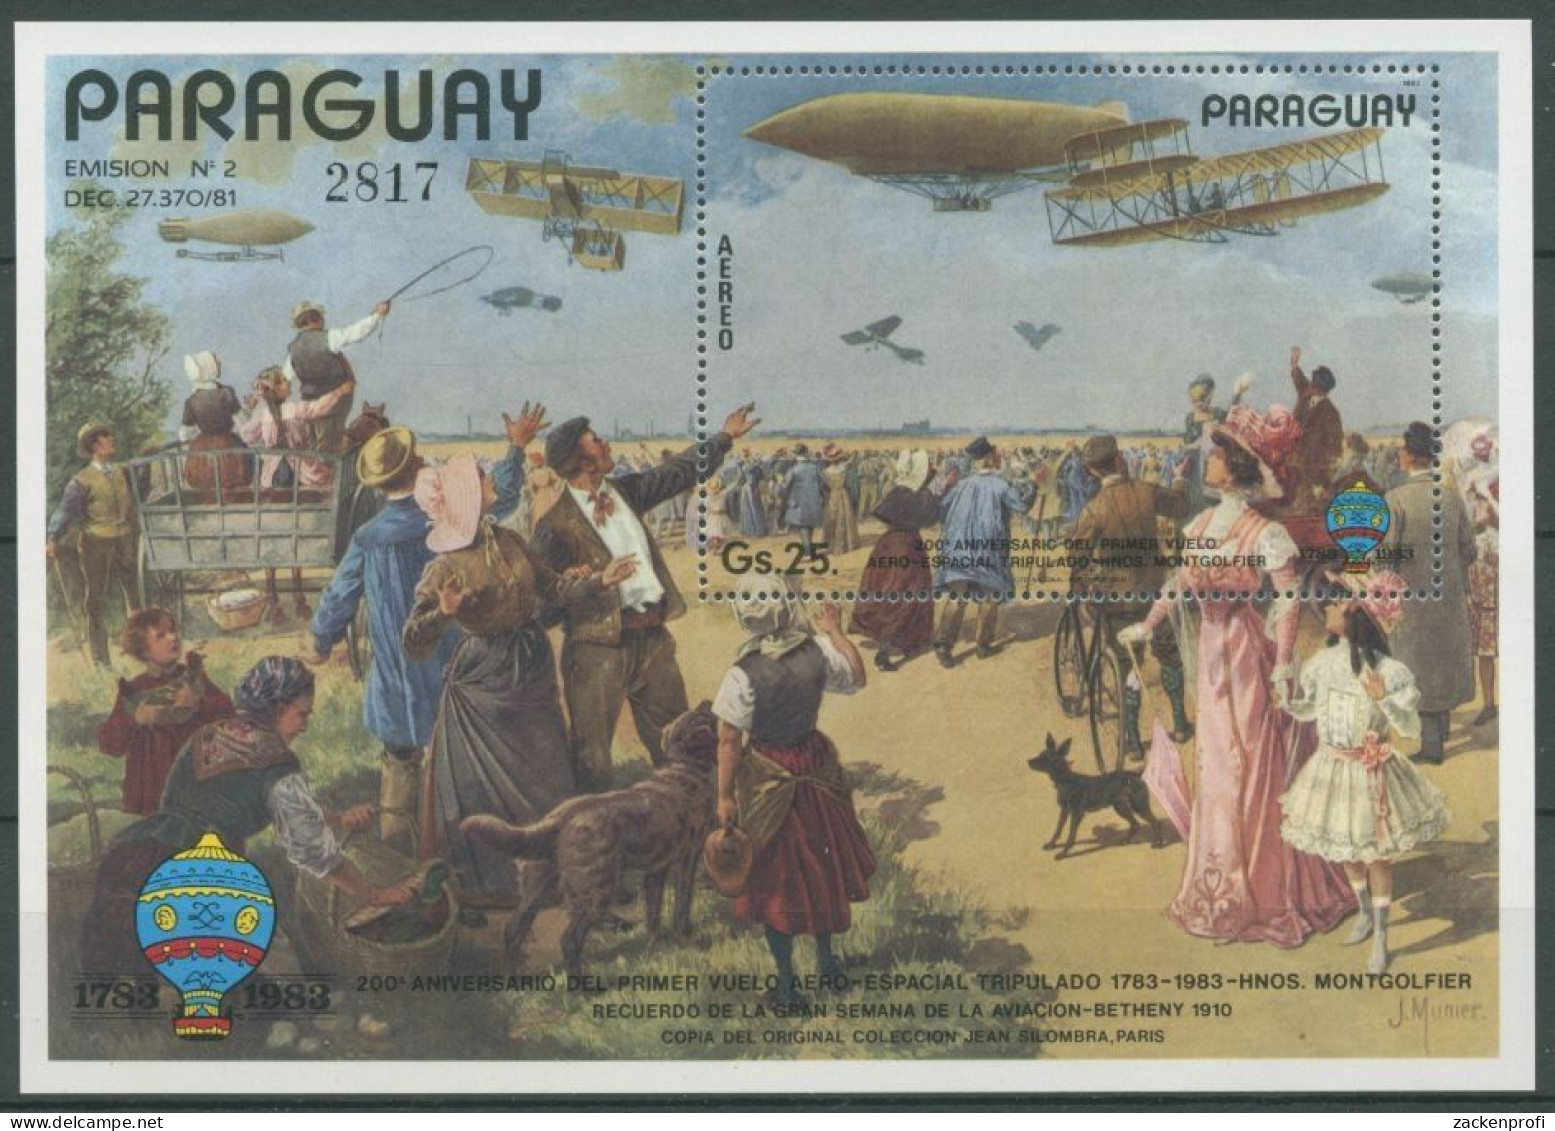 Paraguay 1984 200 J. Luftfahrt Flugwoche Betheny Block 394 Postfrisch (C27936) - Paraguay